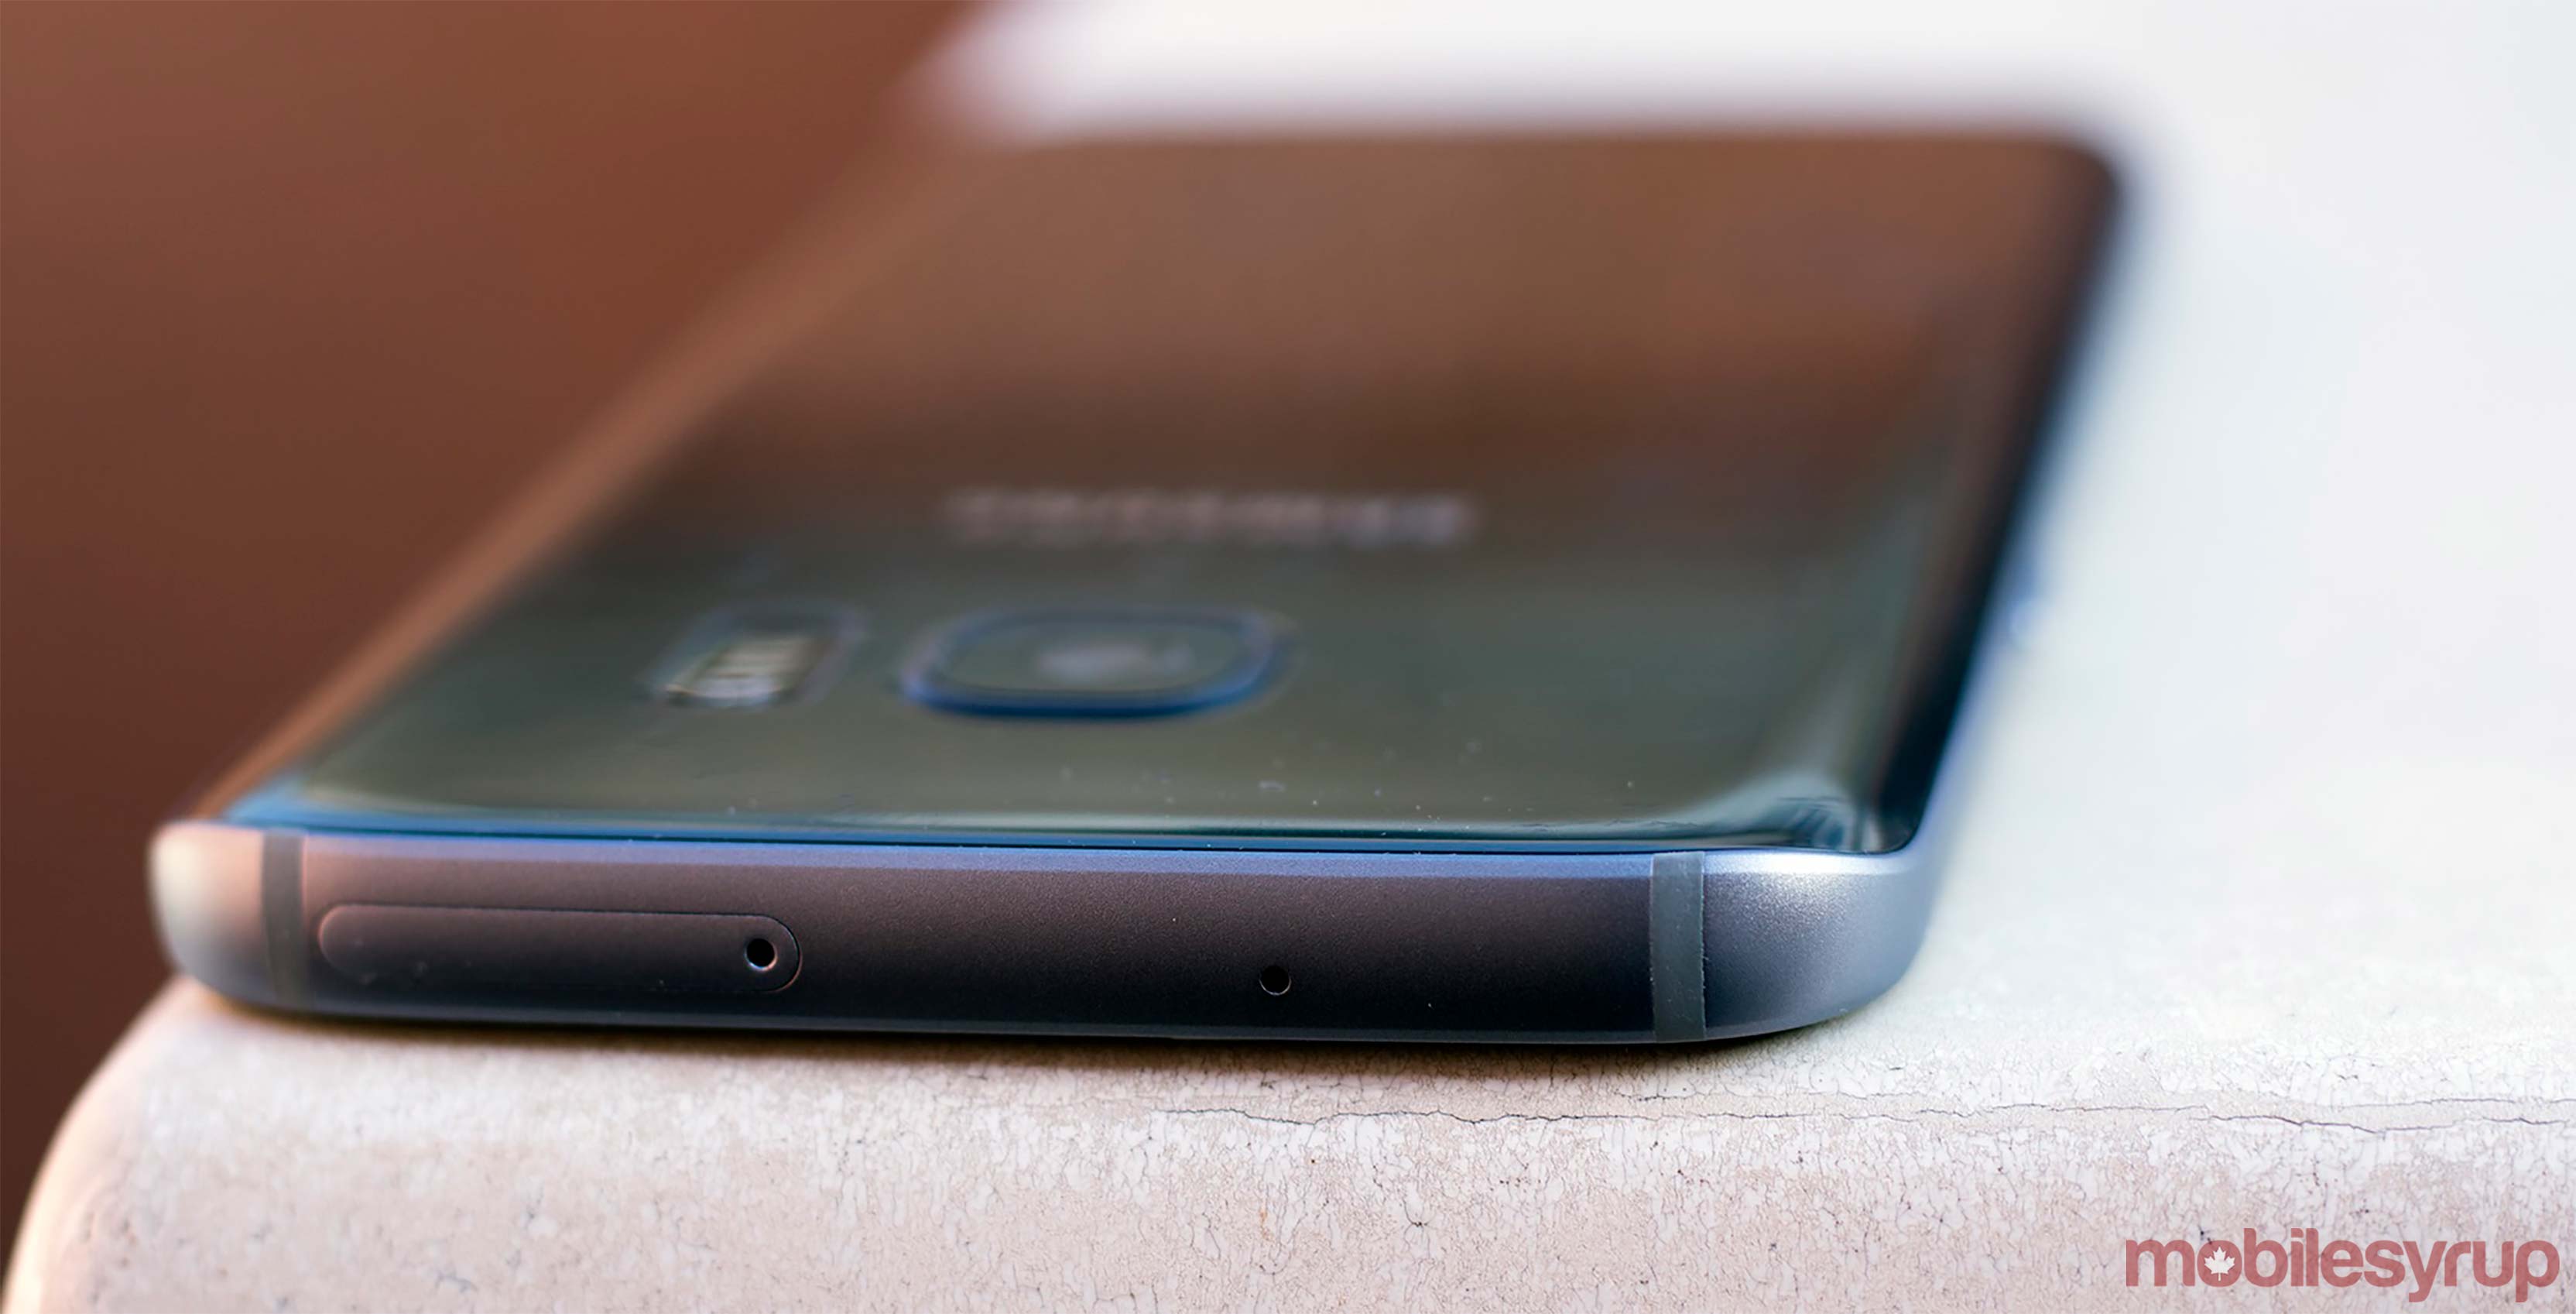 Galaxy S7 smartphone